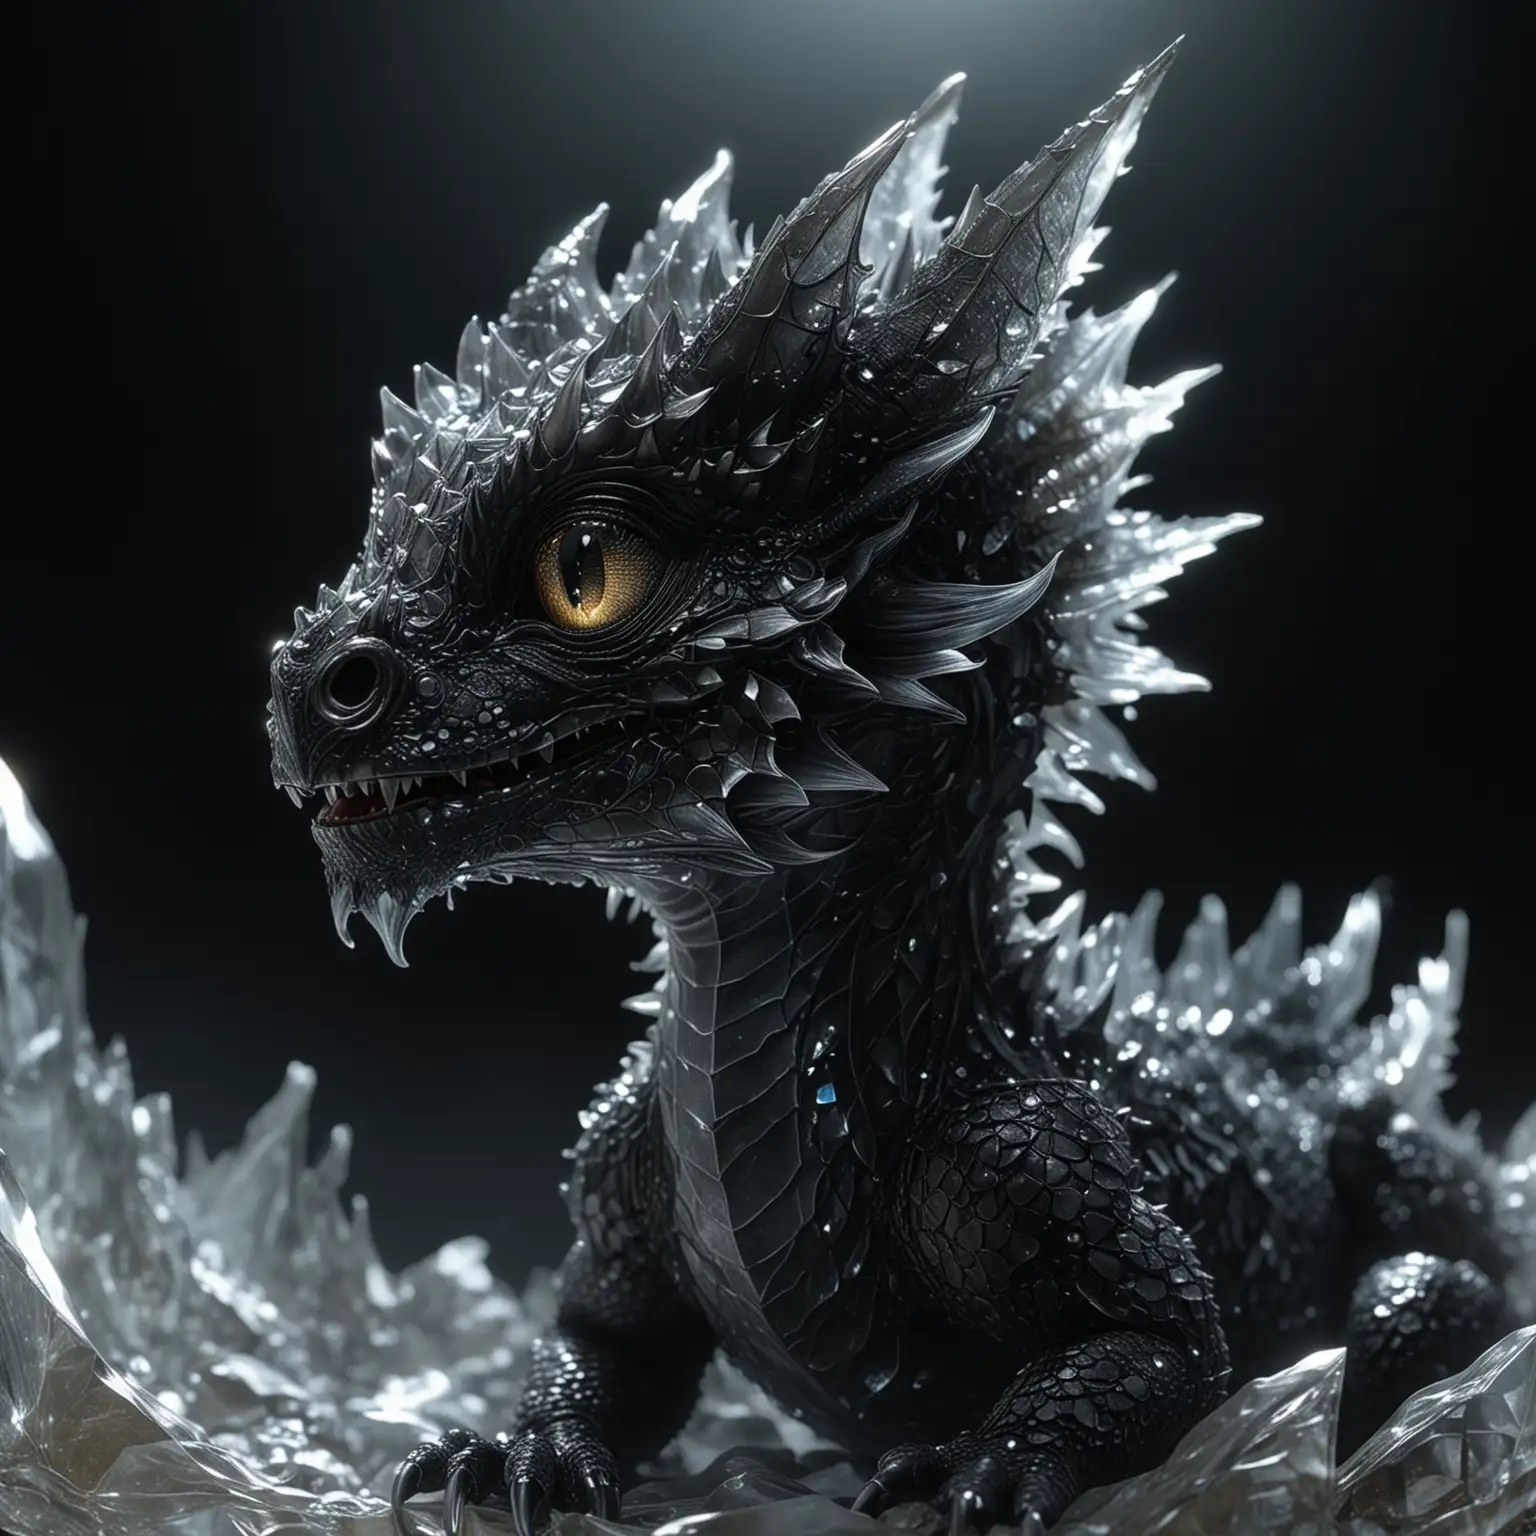 Captivating Hyperrealistic Crystal Baby Dragon Portrait Under Moonlight